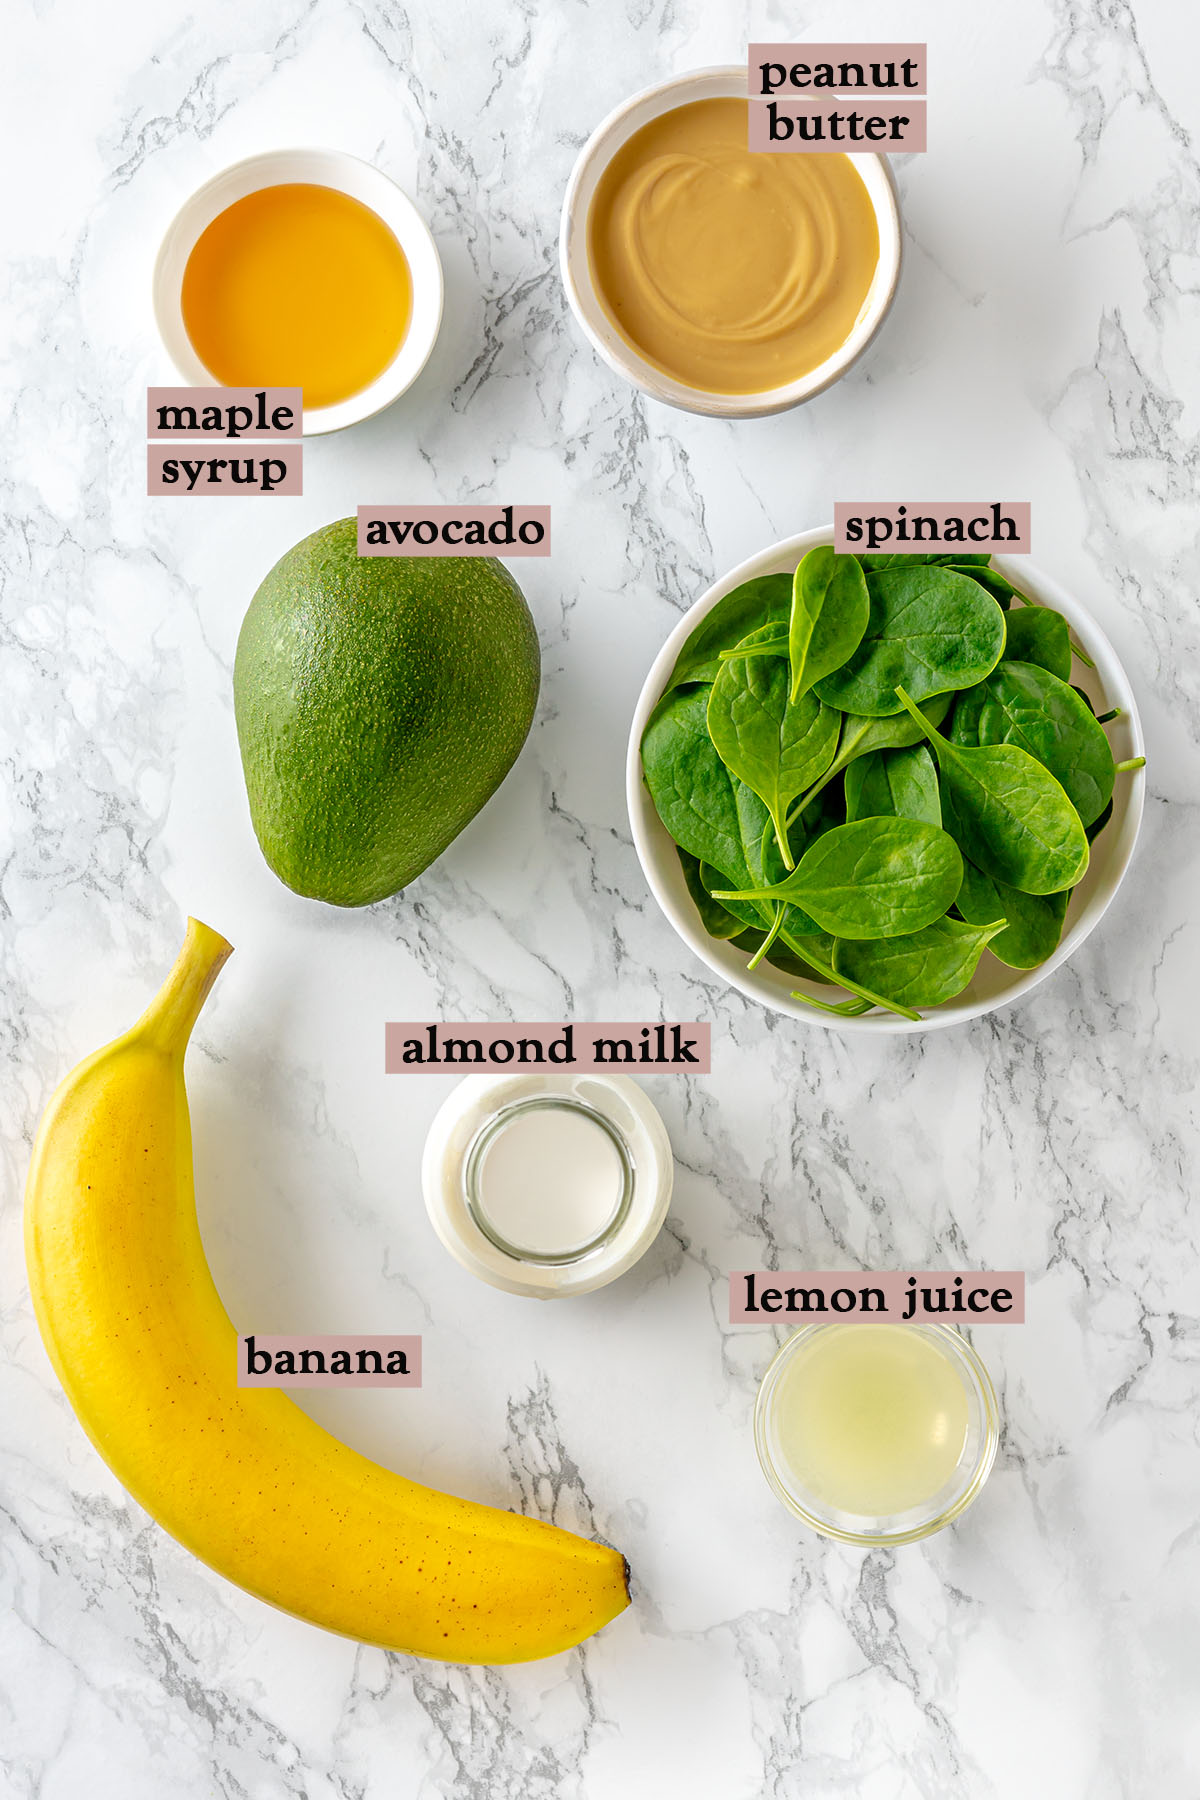 Ingredients to make avocado banana peanut butter smoothie